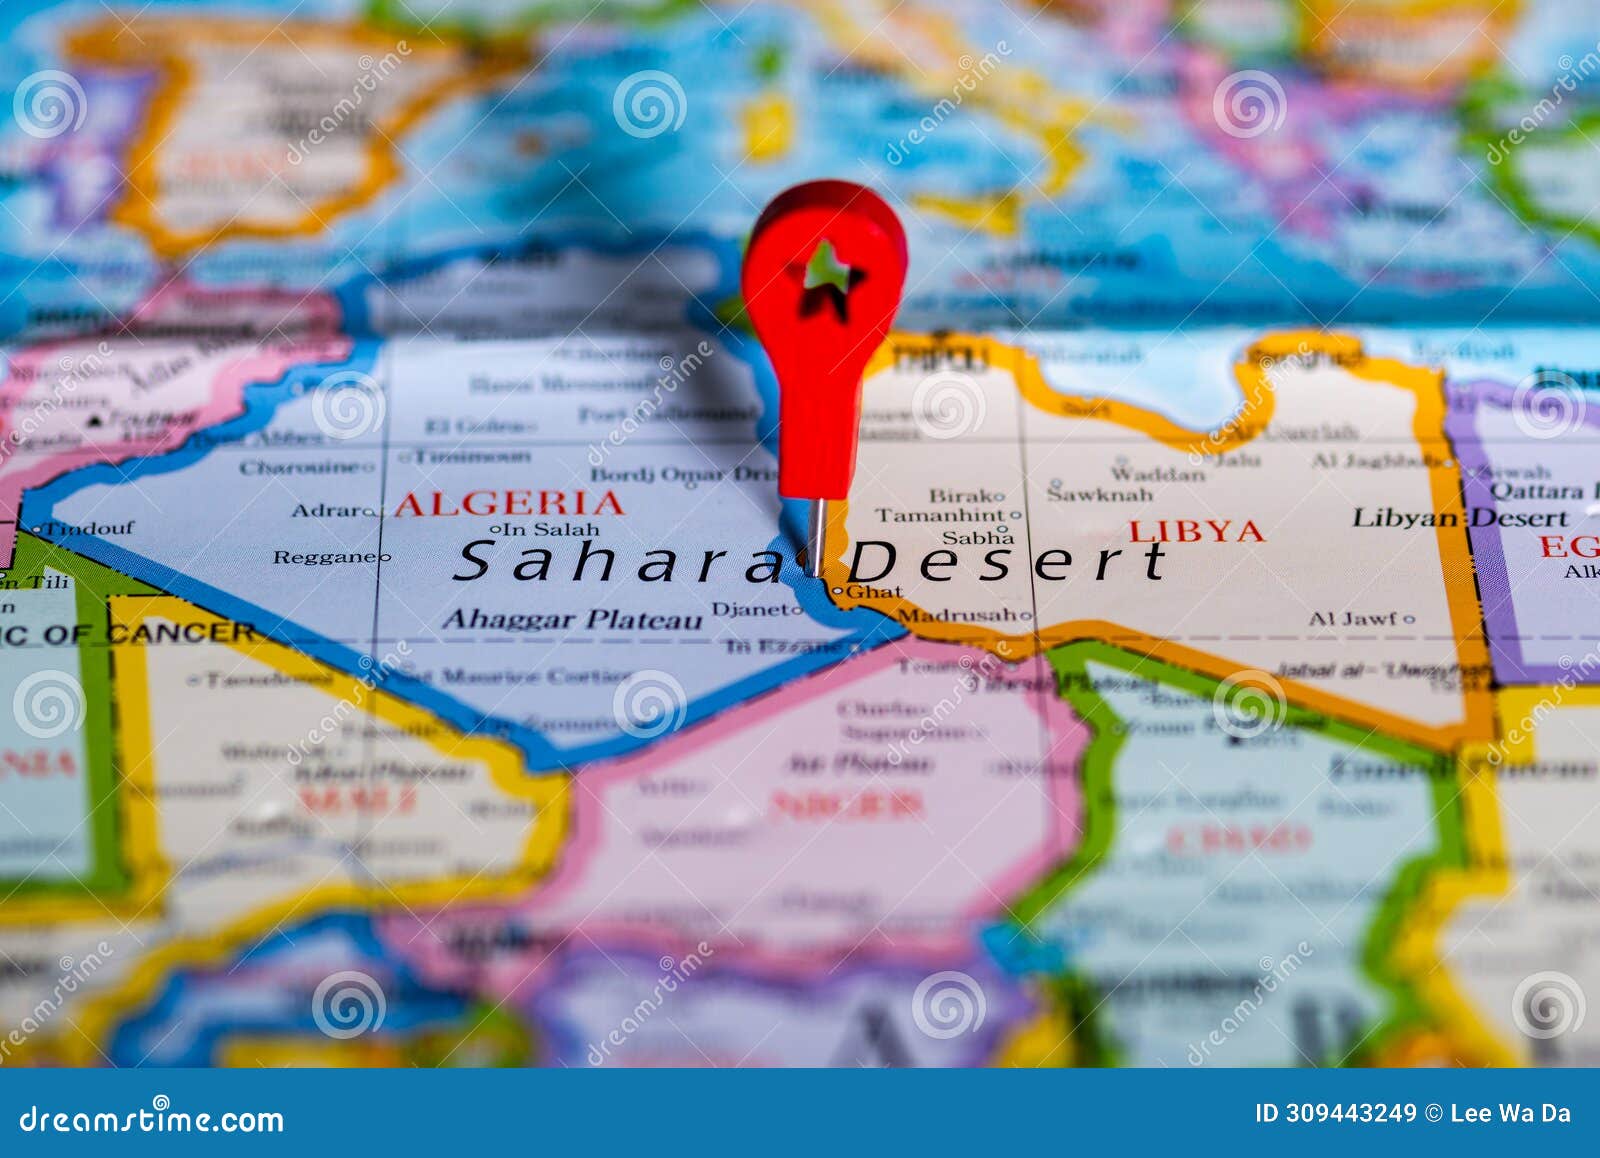 a beautiful macro shot at colourful and detailed map of the sahara desert